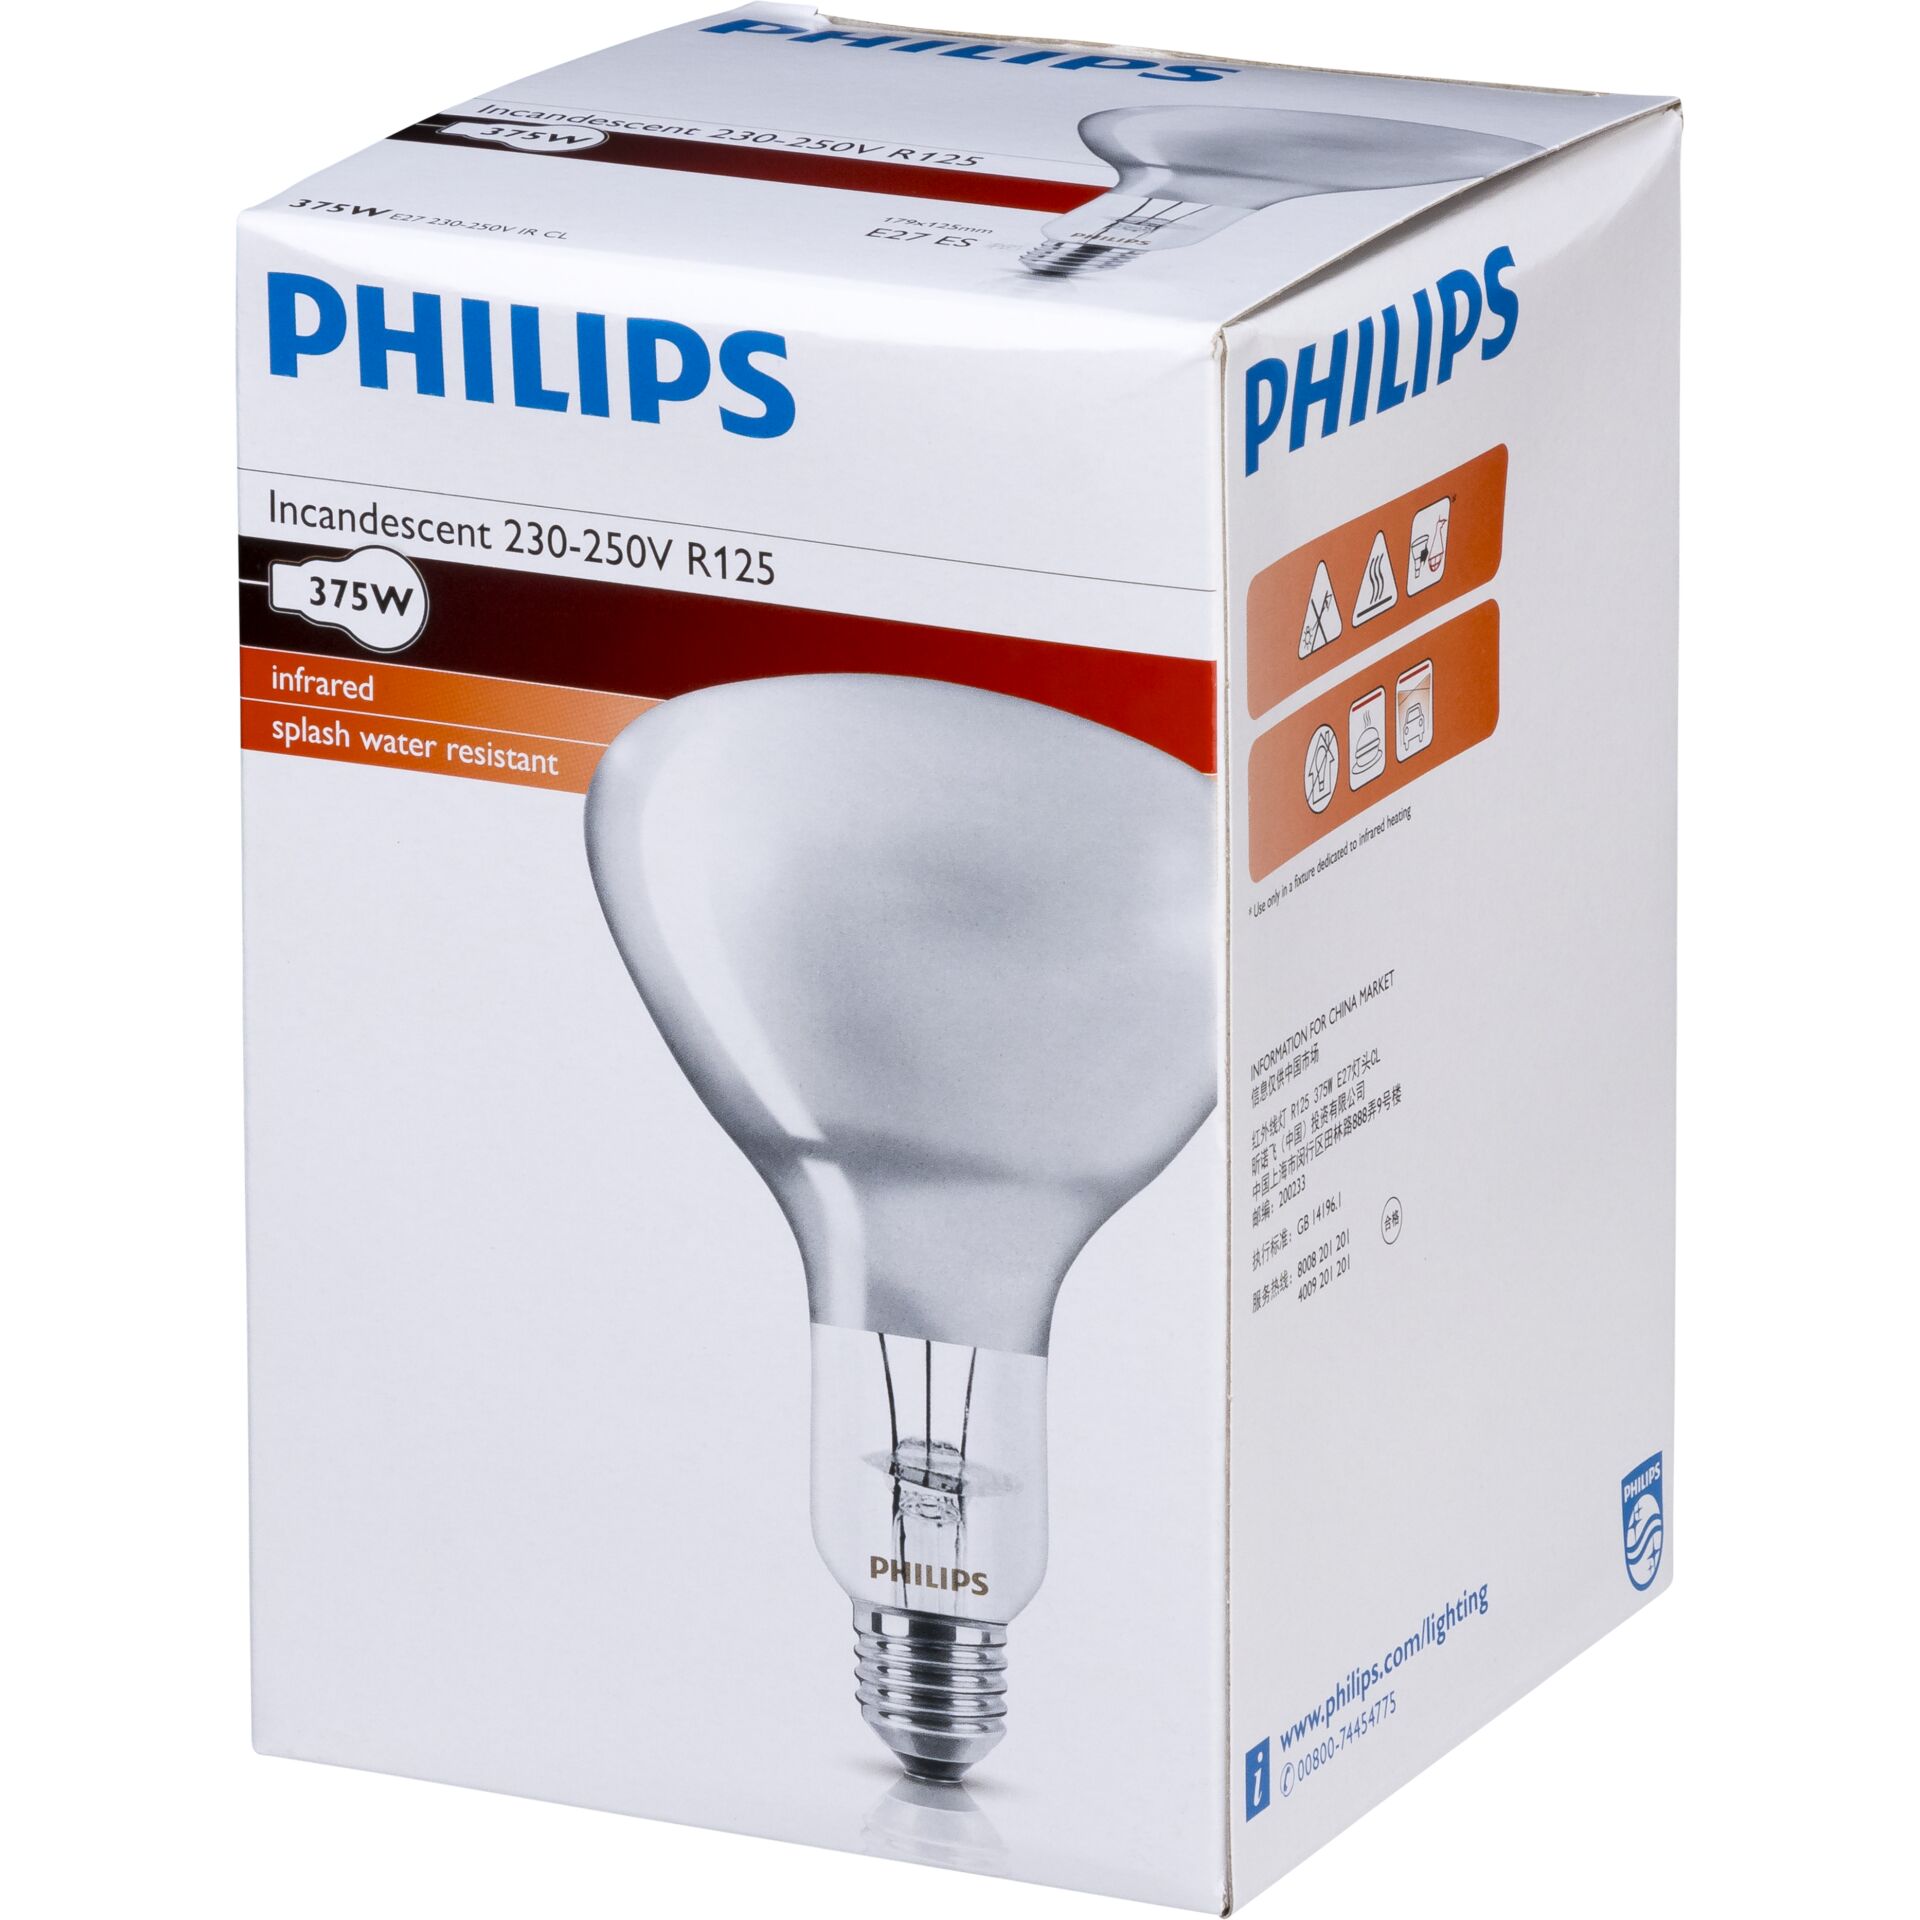 Philips Infrarotlampe BR125 IR 375W E27 230-250V CL